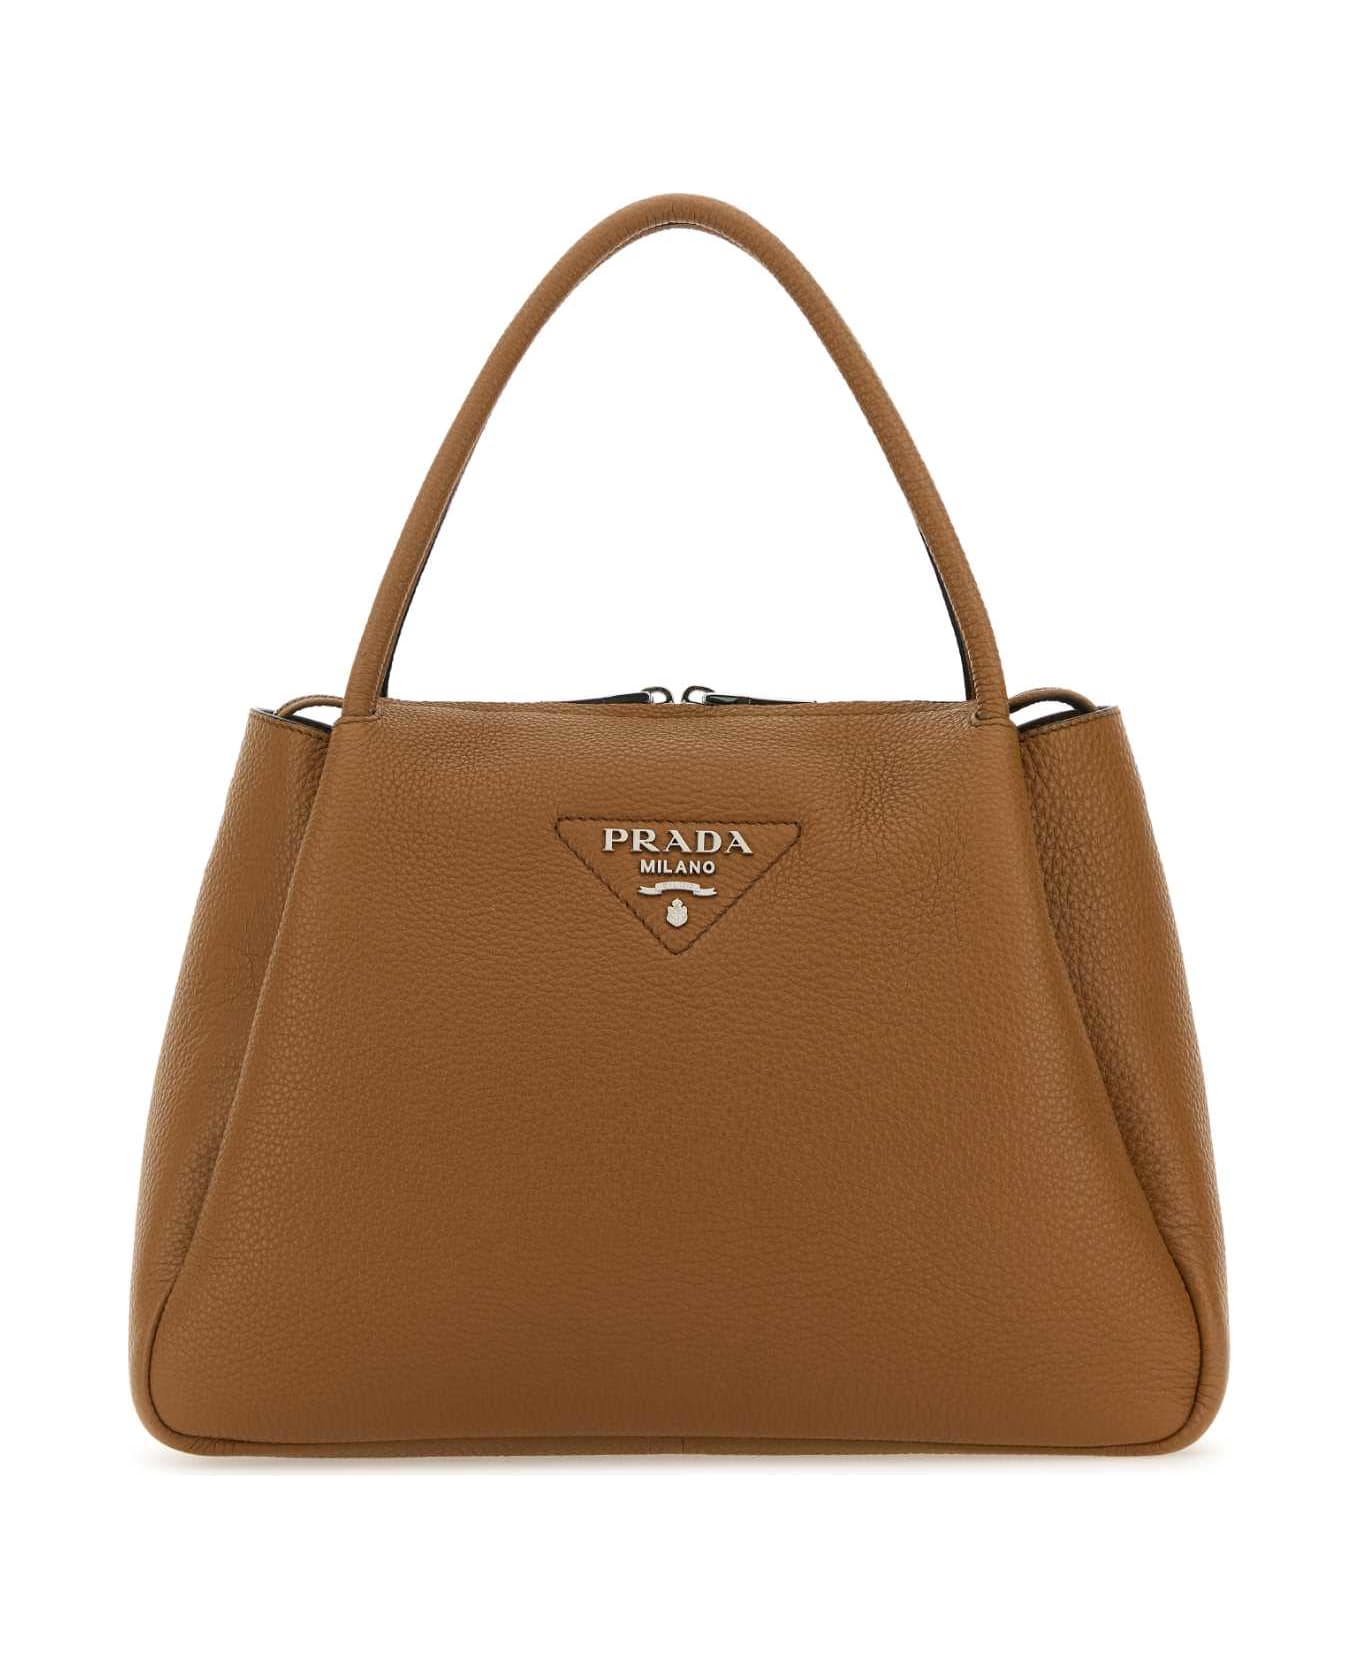 Prada Brown Leather Large Handbag - CARAMEL 0 N